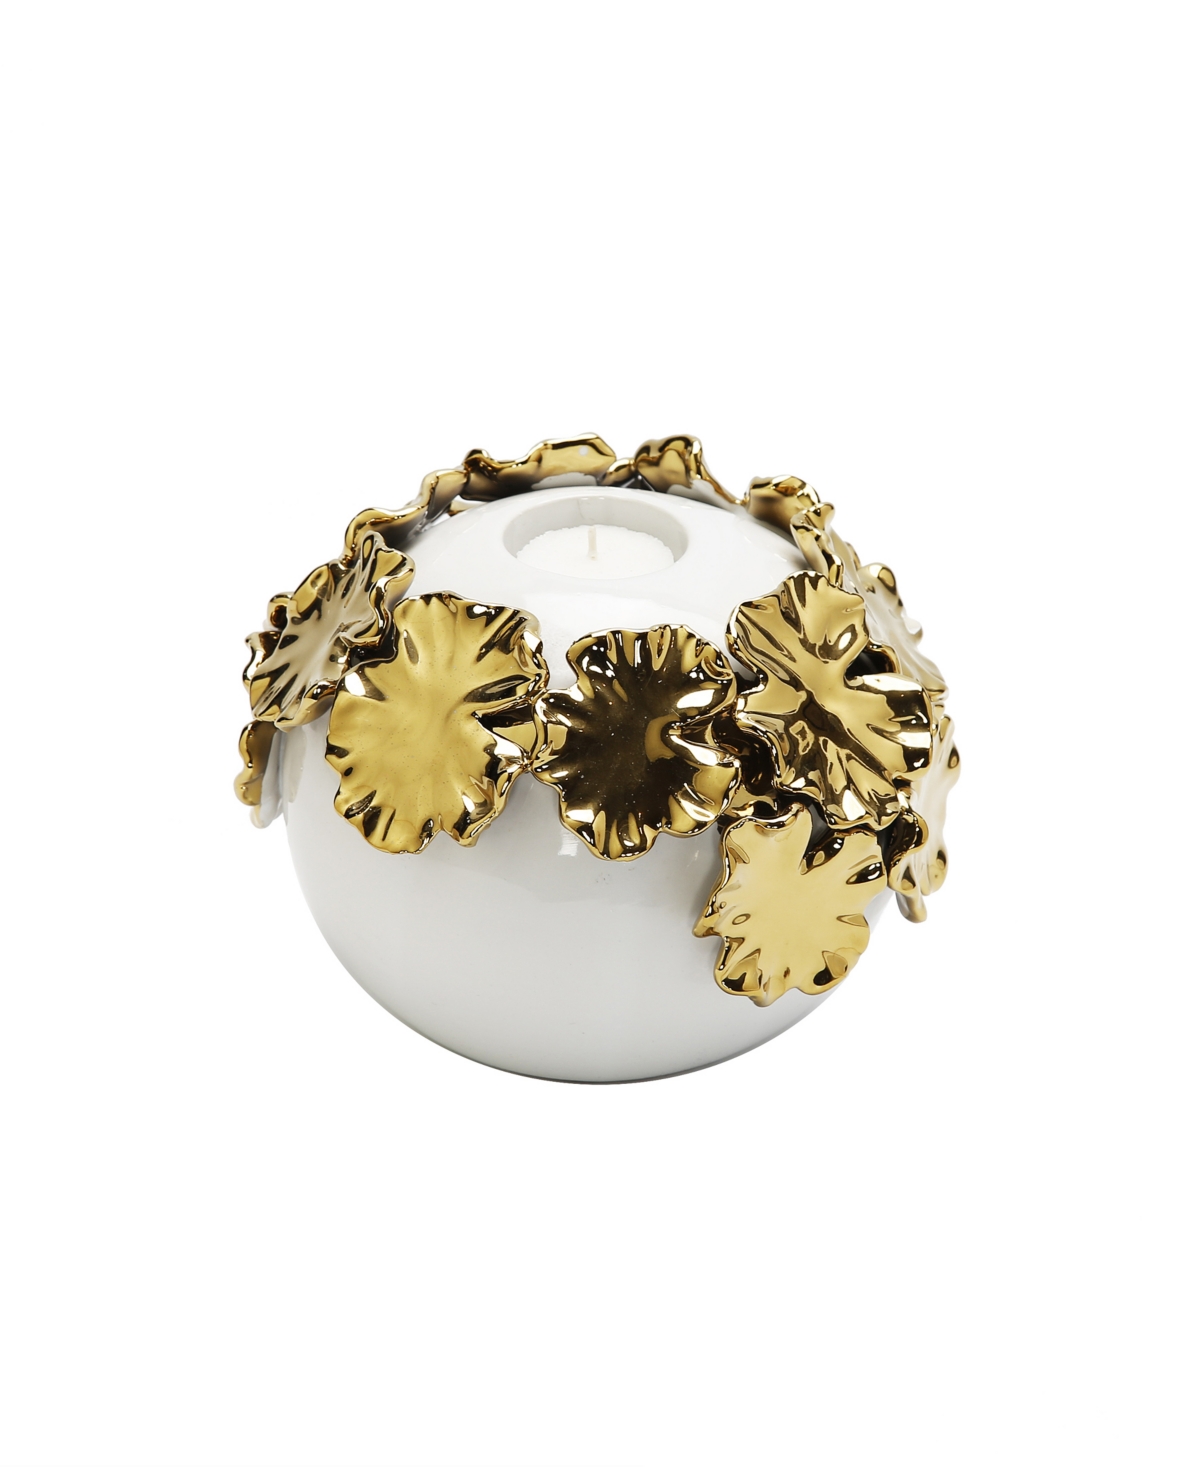 Vivience White Ceramic Candle Holder Gold-tone Flower Design